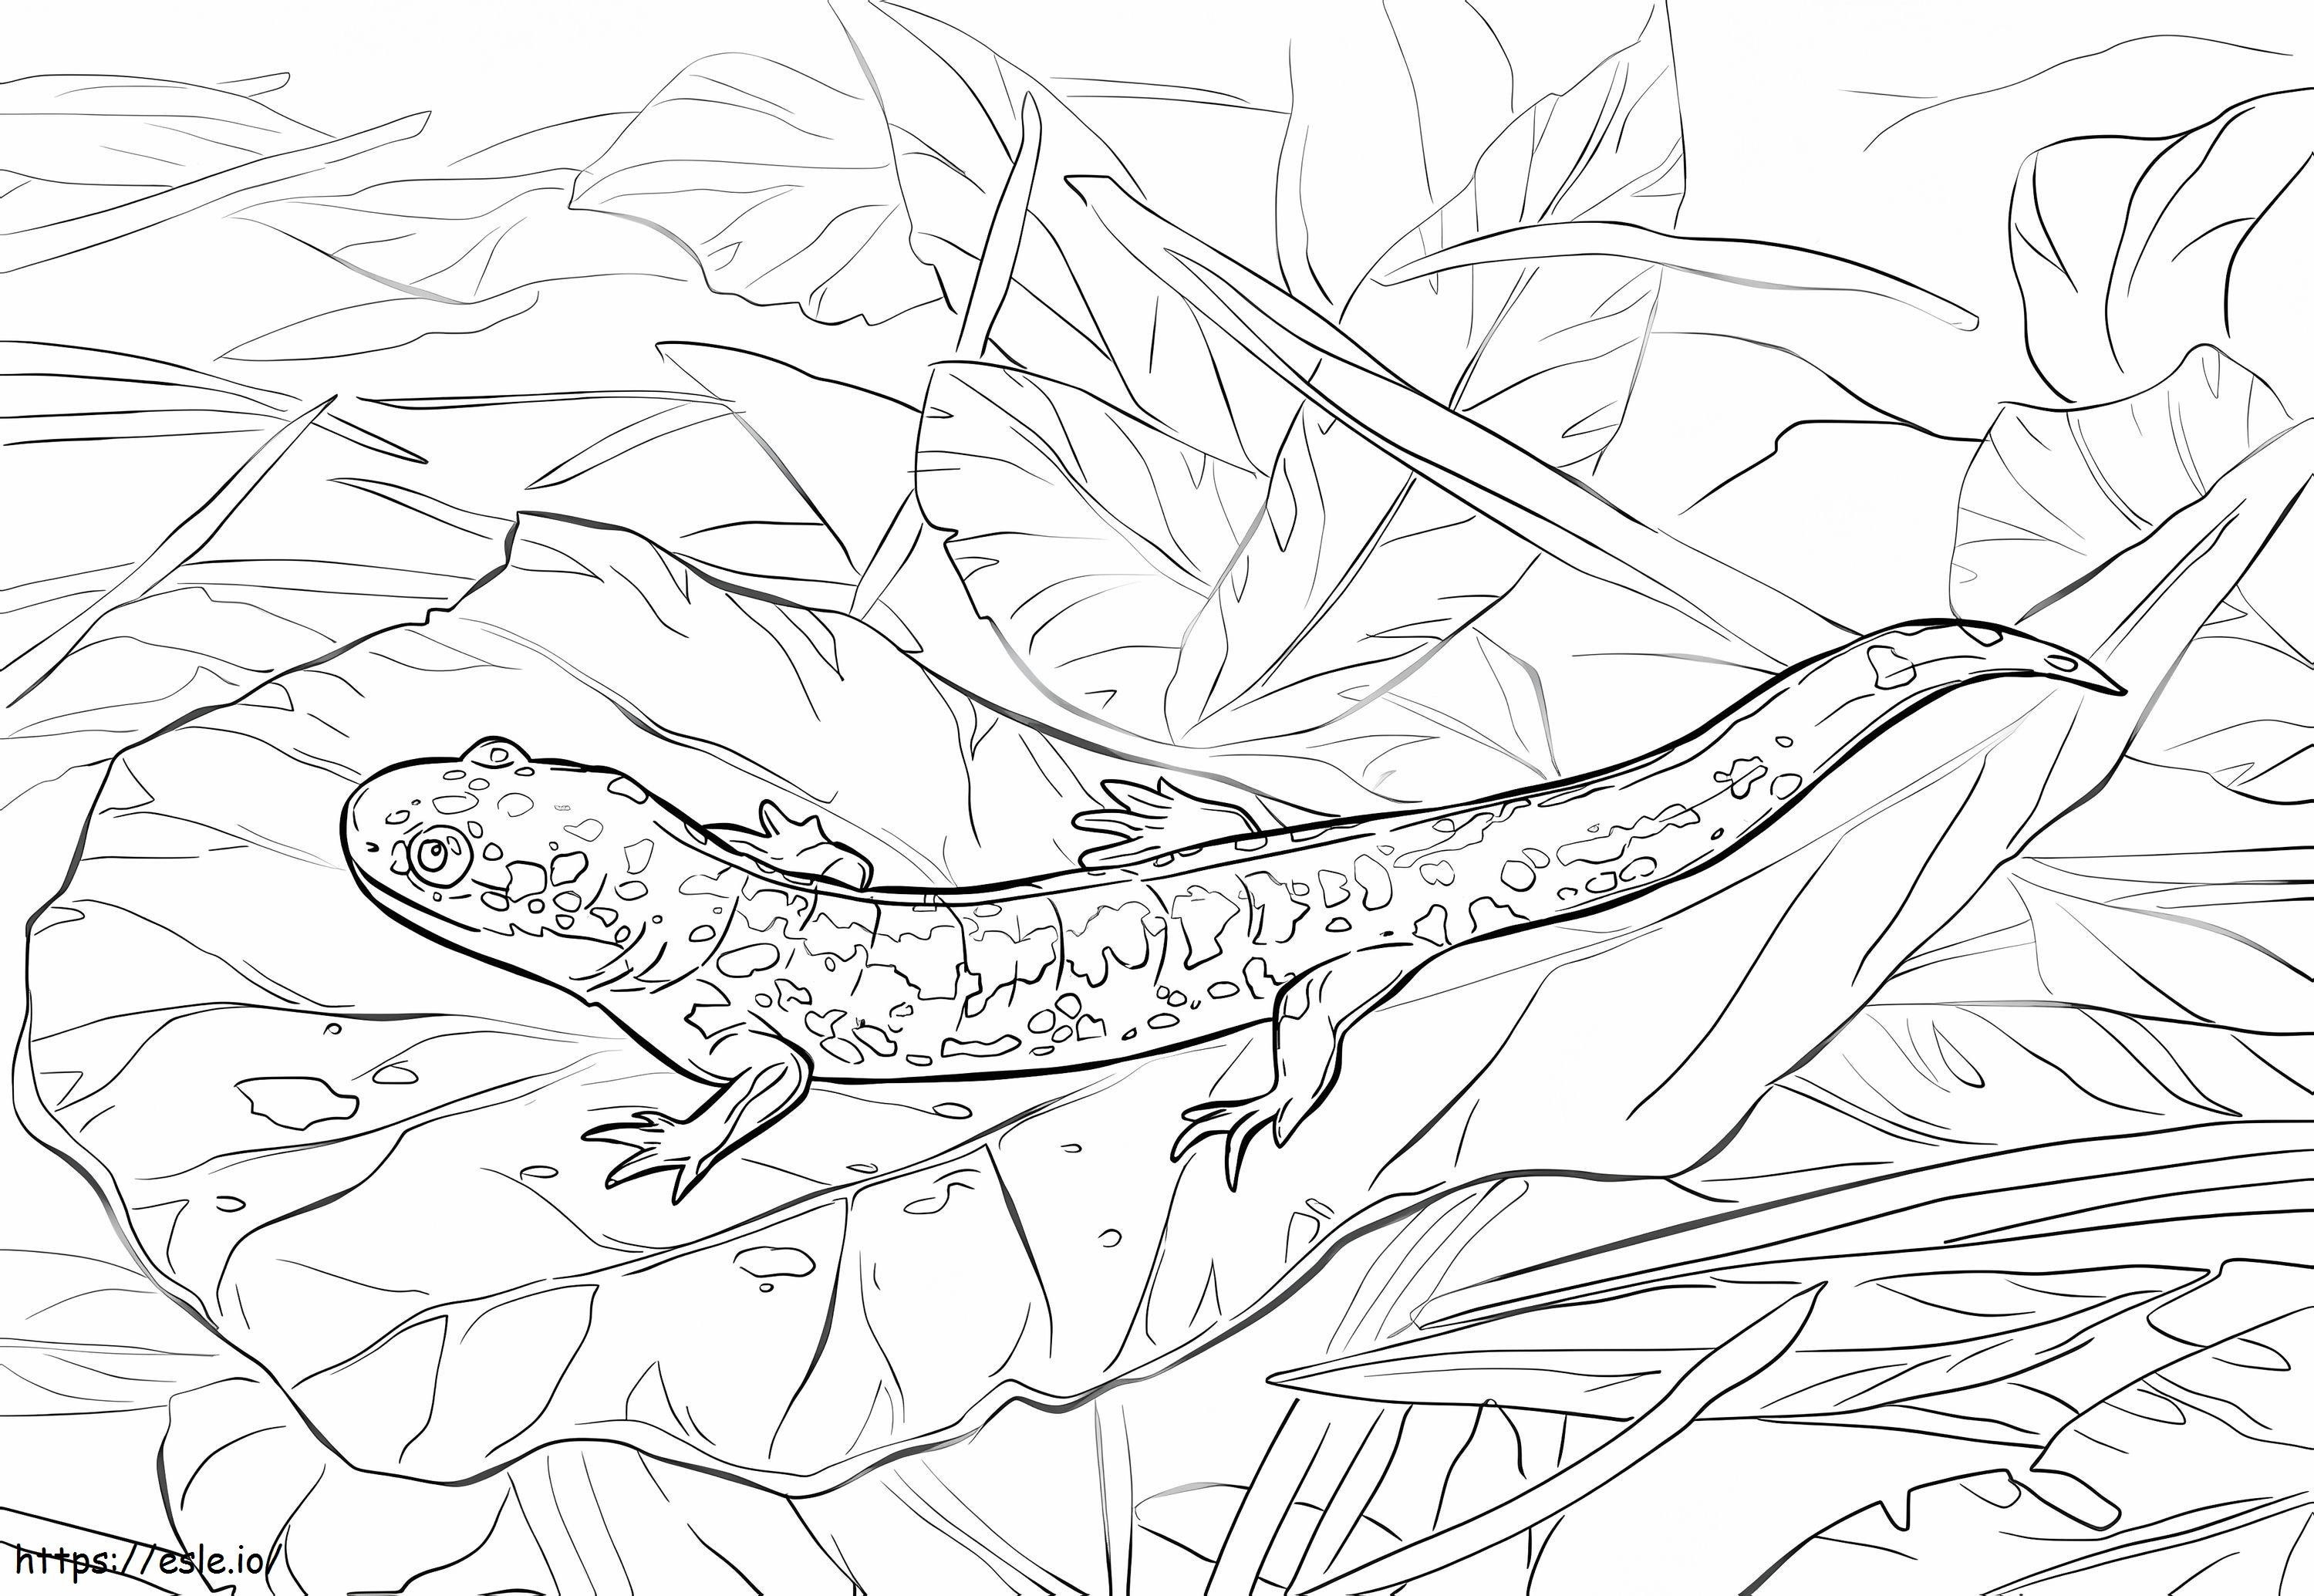 Eastern Tiger Salamander coloring page